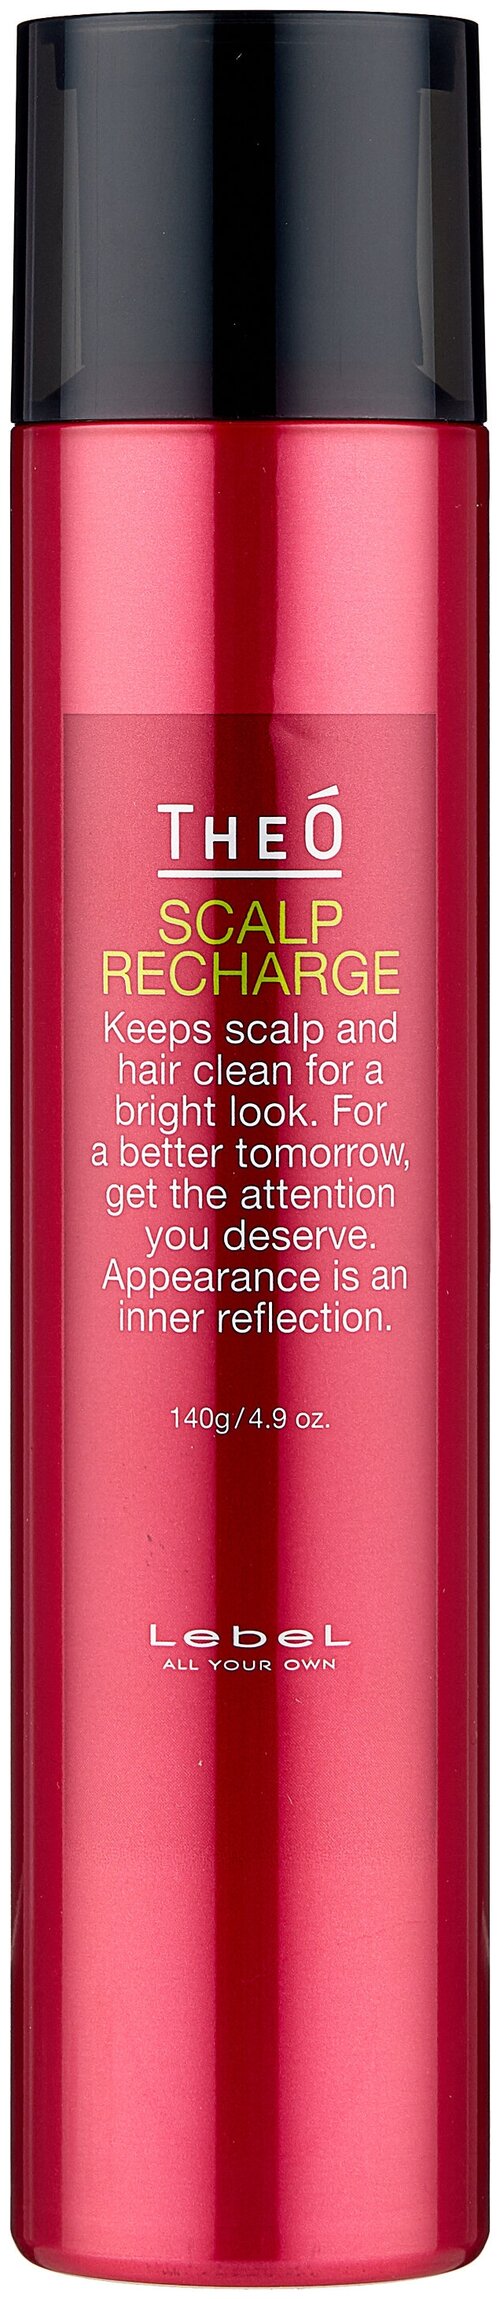 Lebel Cosmetics Восстанавливающий спрей для волос и кожи головы Theo Scalp Recharge, 140 мл, спрей